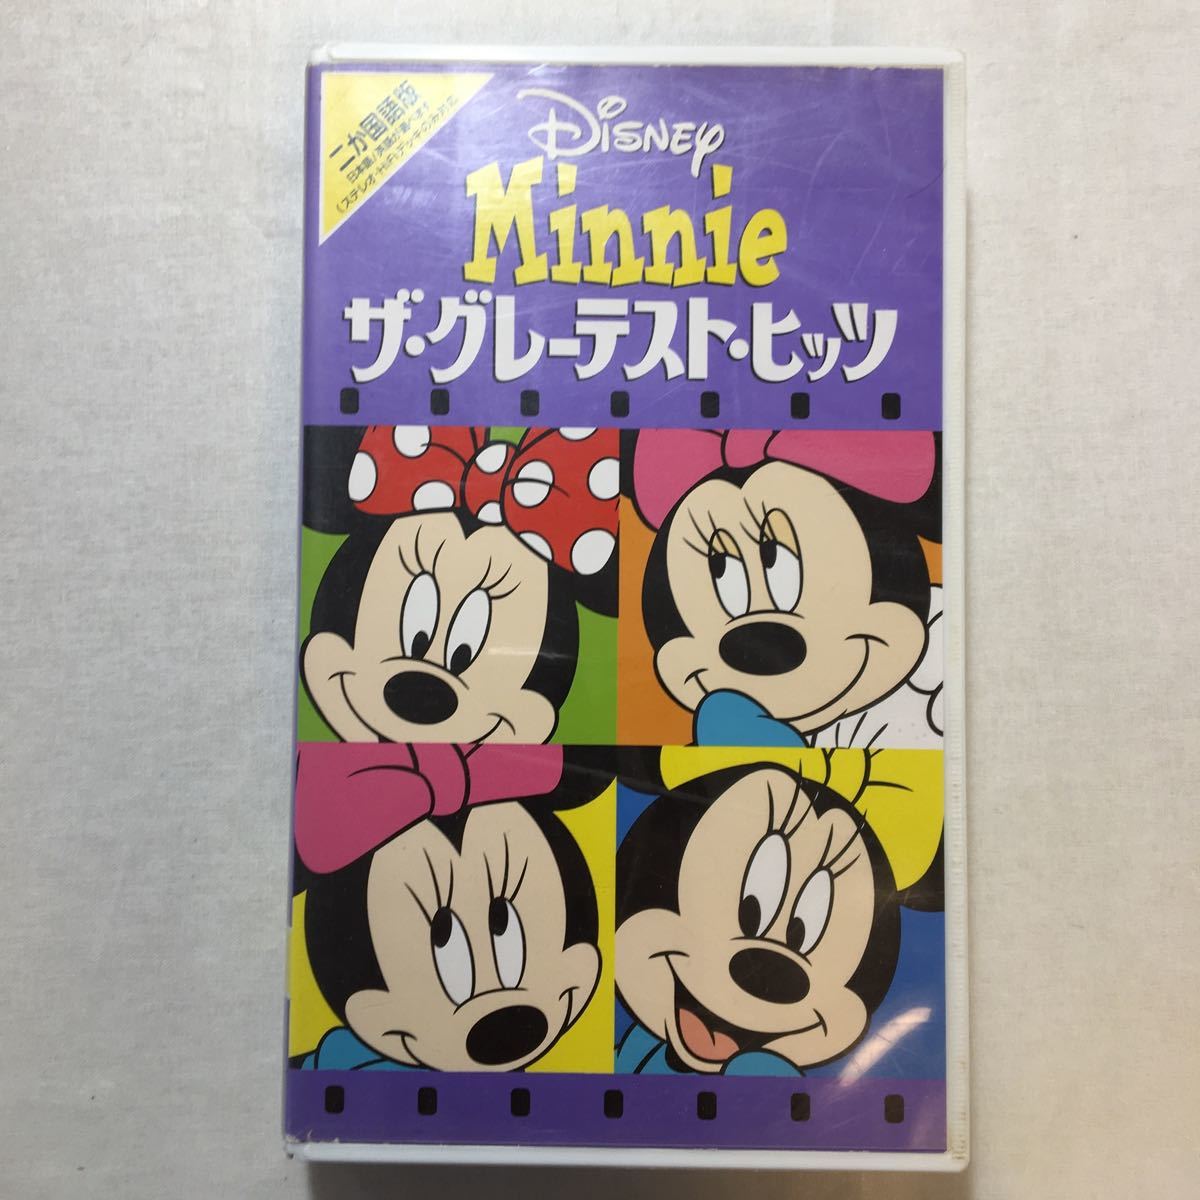 zaa-zvd14!Disney minnie / The * серый тест *hitsu[ 2 государственных языков версия ] [VHS] видео woruto* Disney ( работа ) 50 минут 1997/12/19